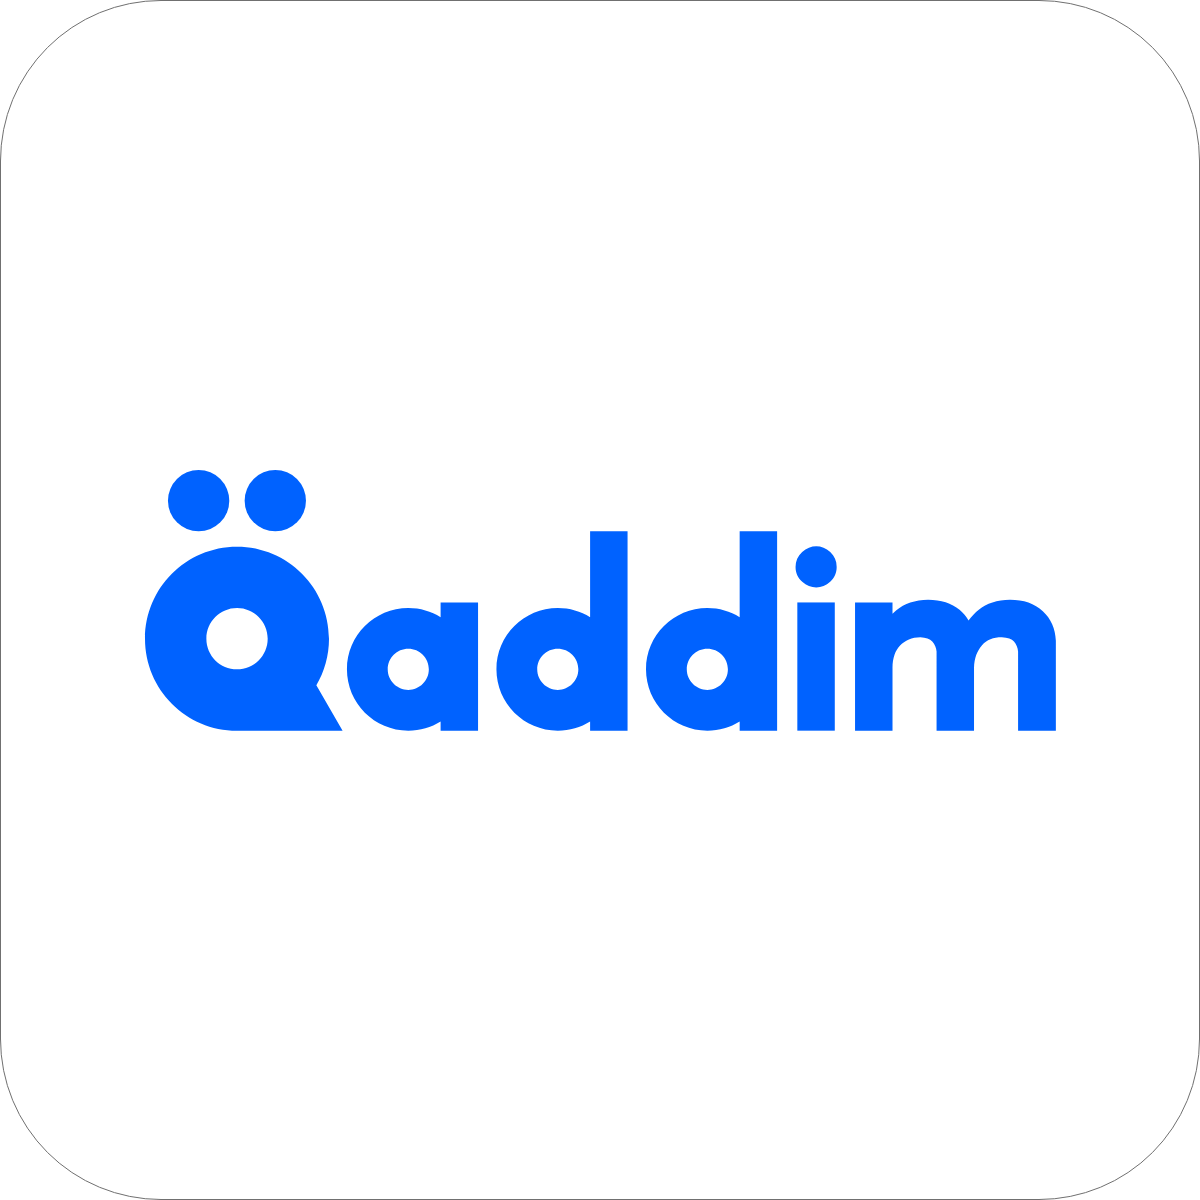 Qaddim - University Courses, Rankings & Entry Requirements